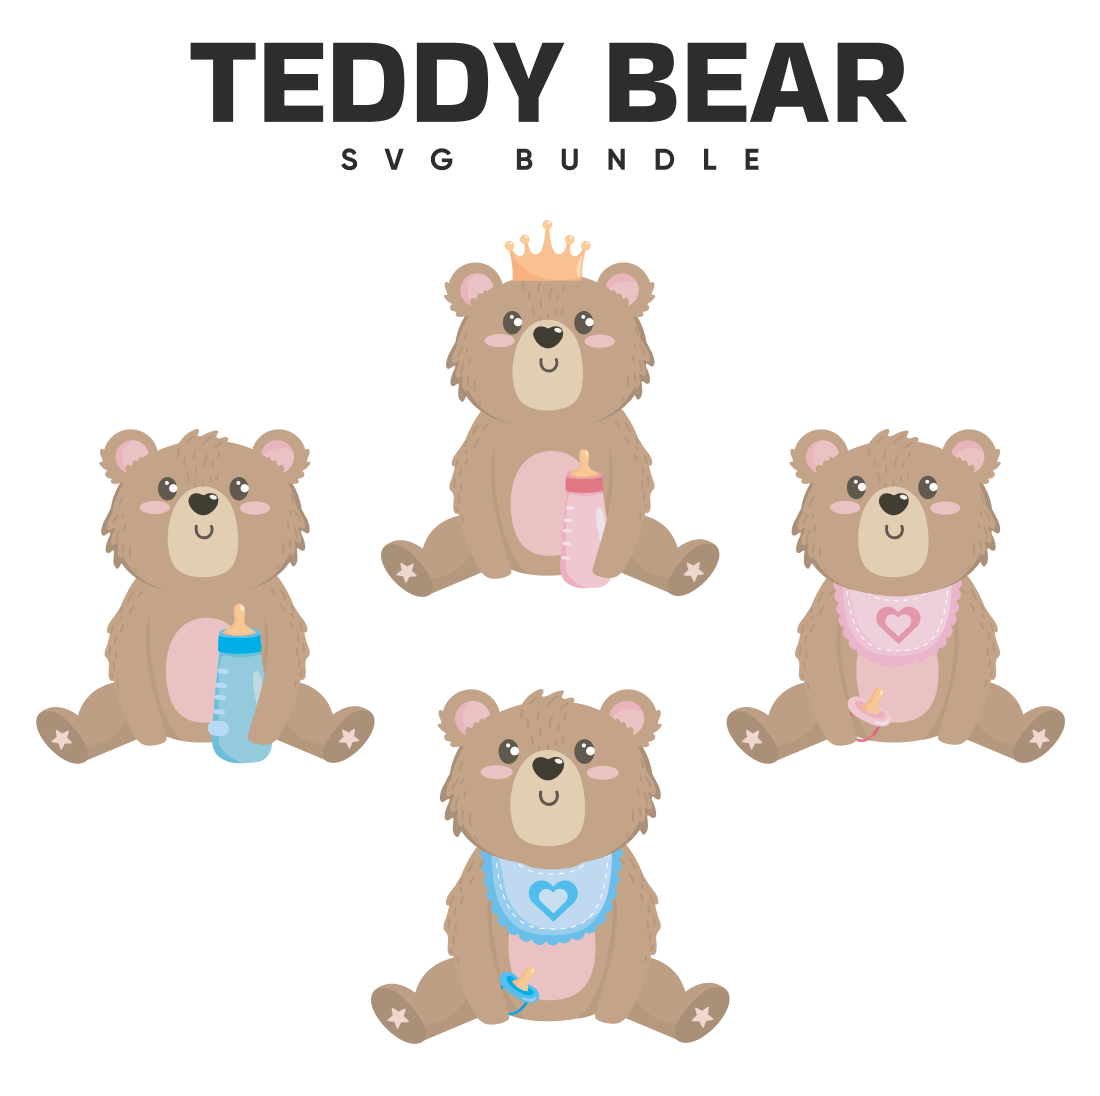 Teddy bear SVG Bundle.